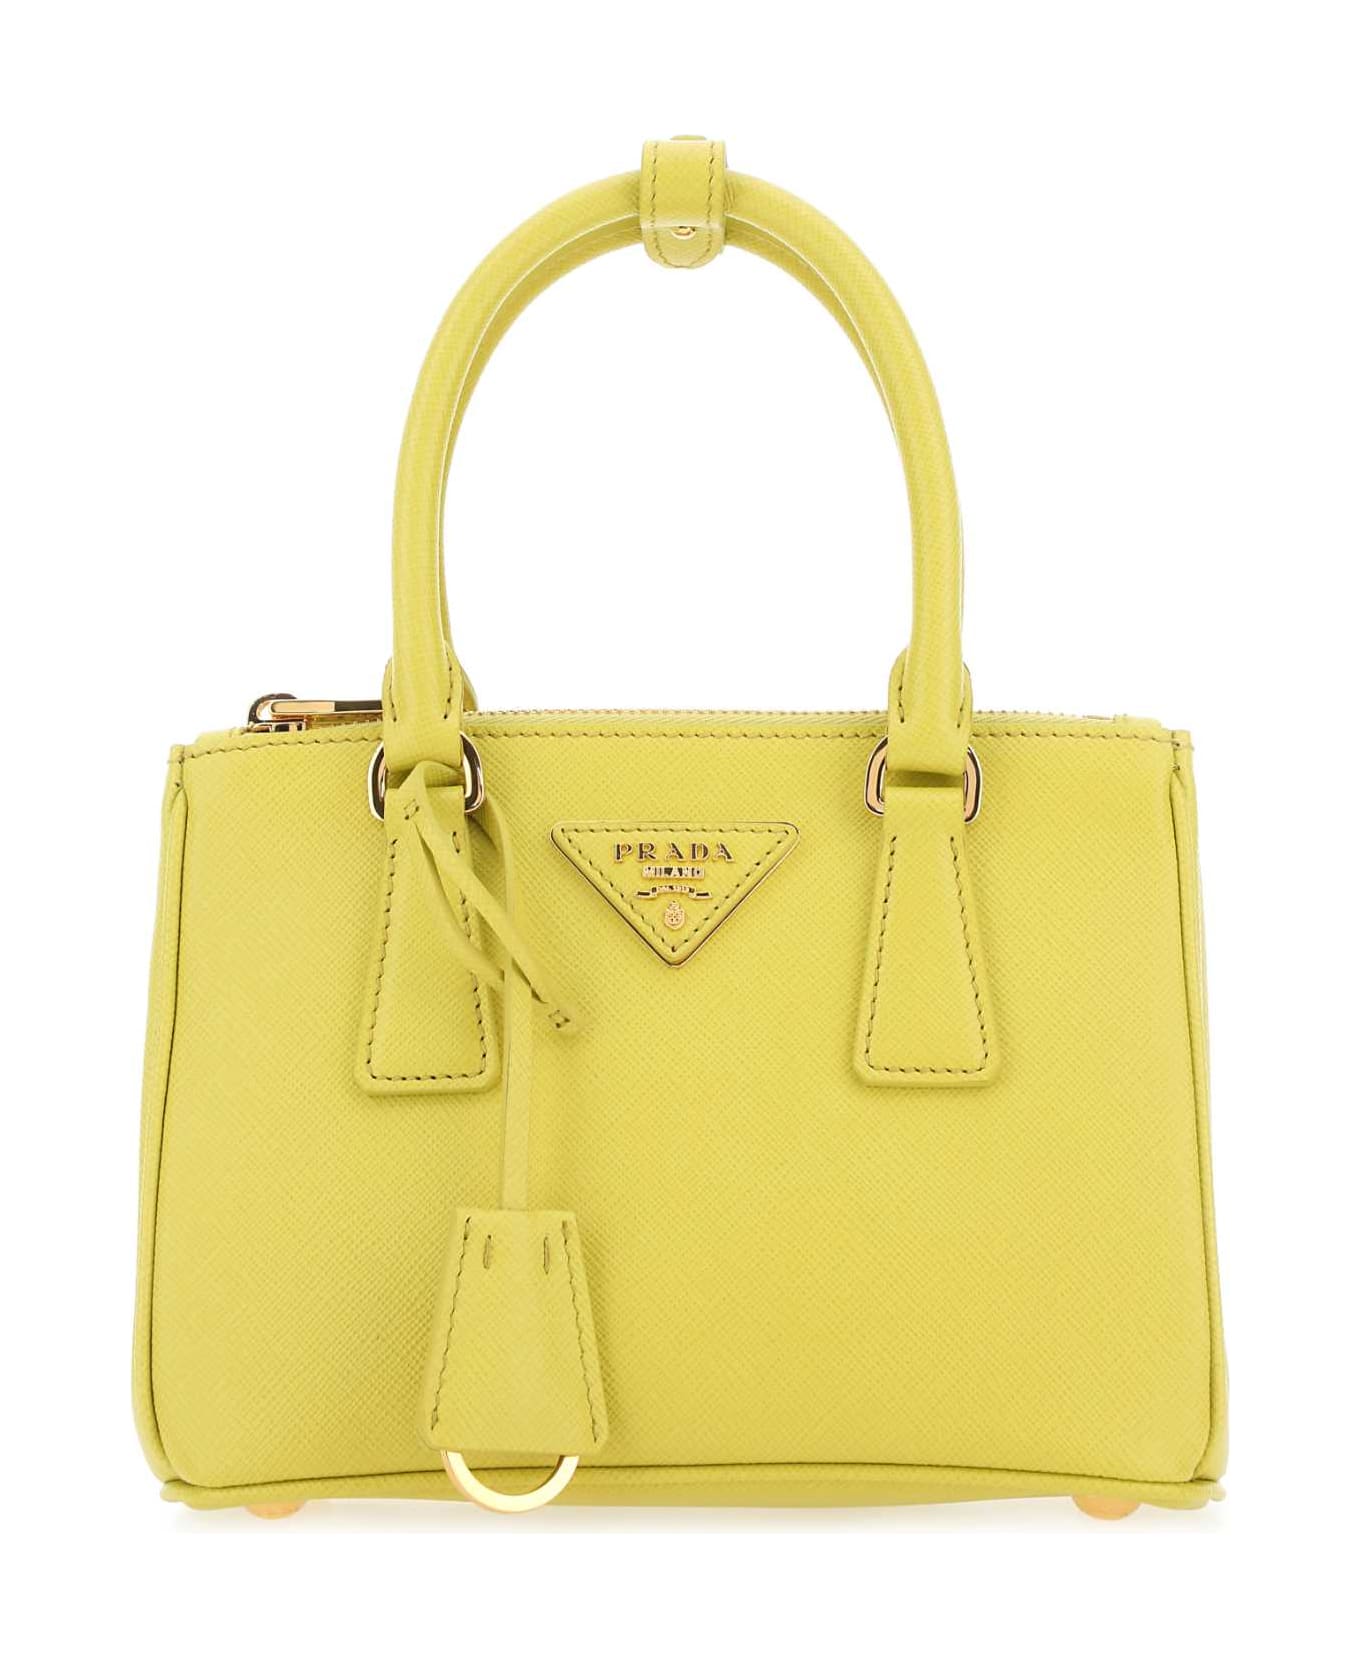 Prada Yellow Leather Handbag - Yellow